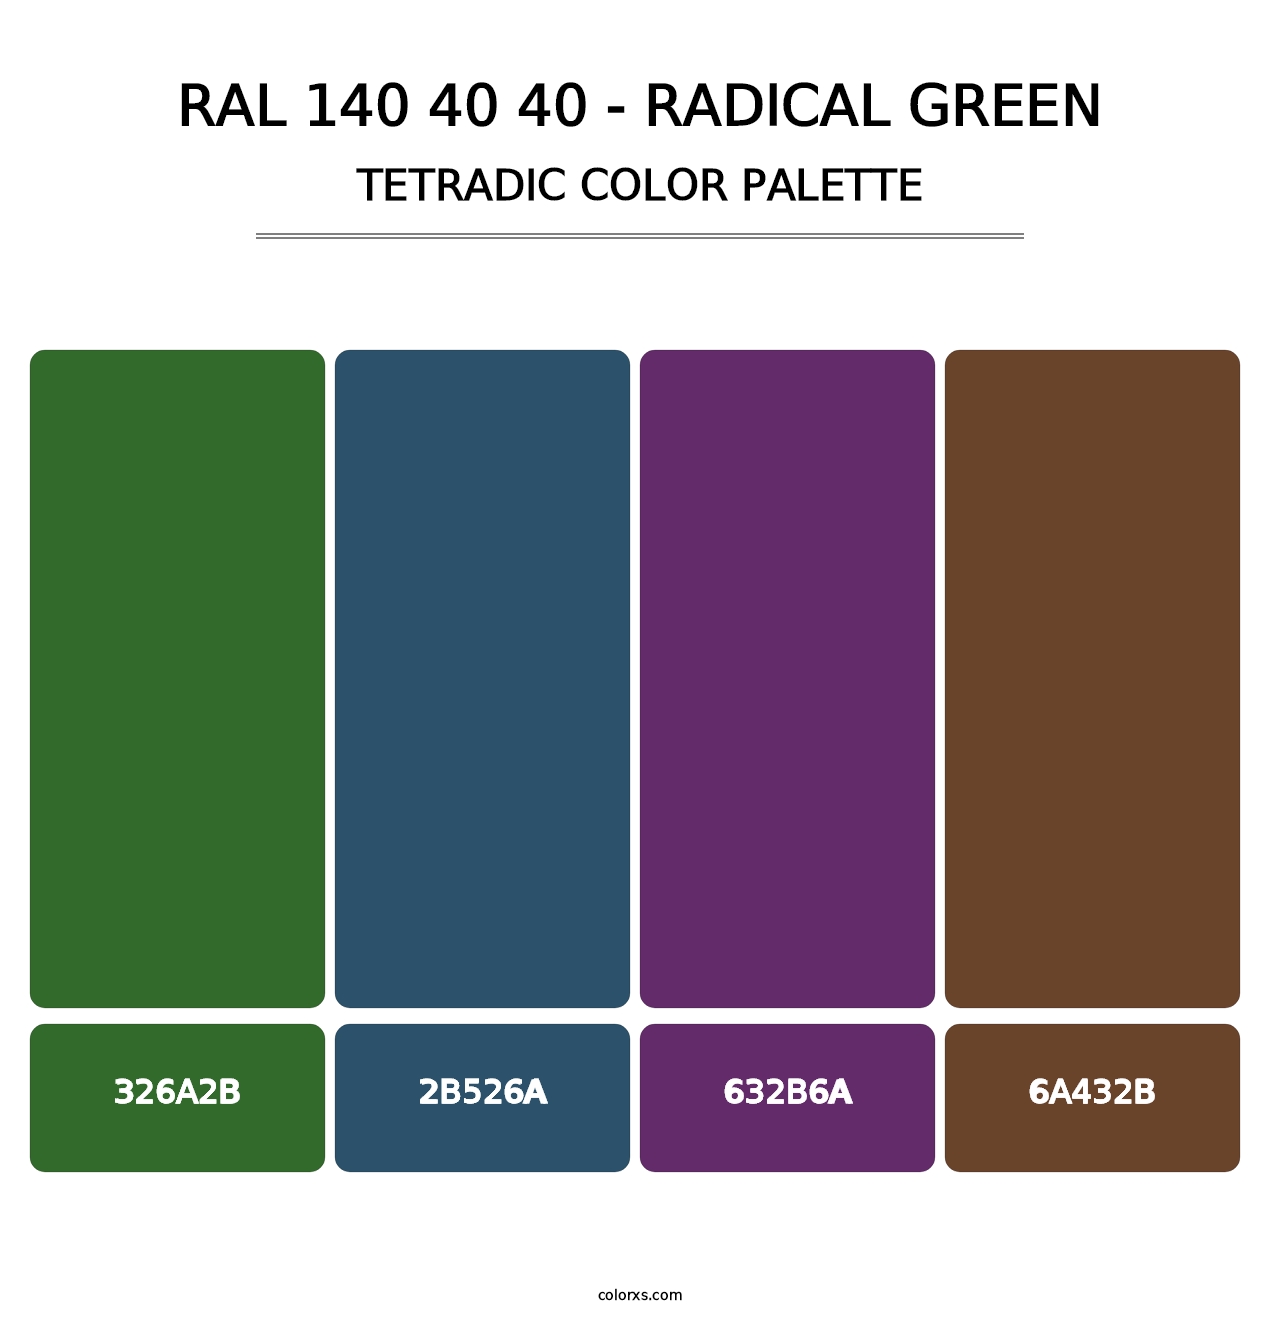 RAL 140 40 40 - Radical Green - Tetradic Color Palette